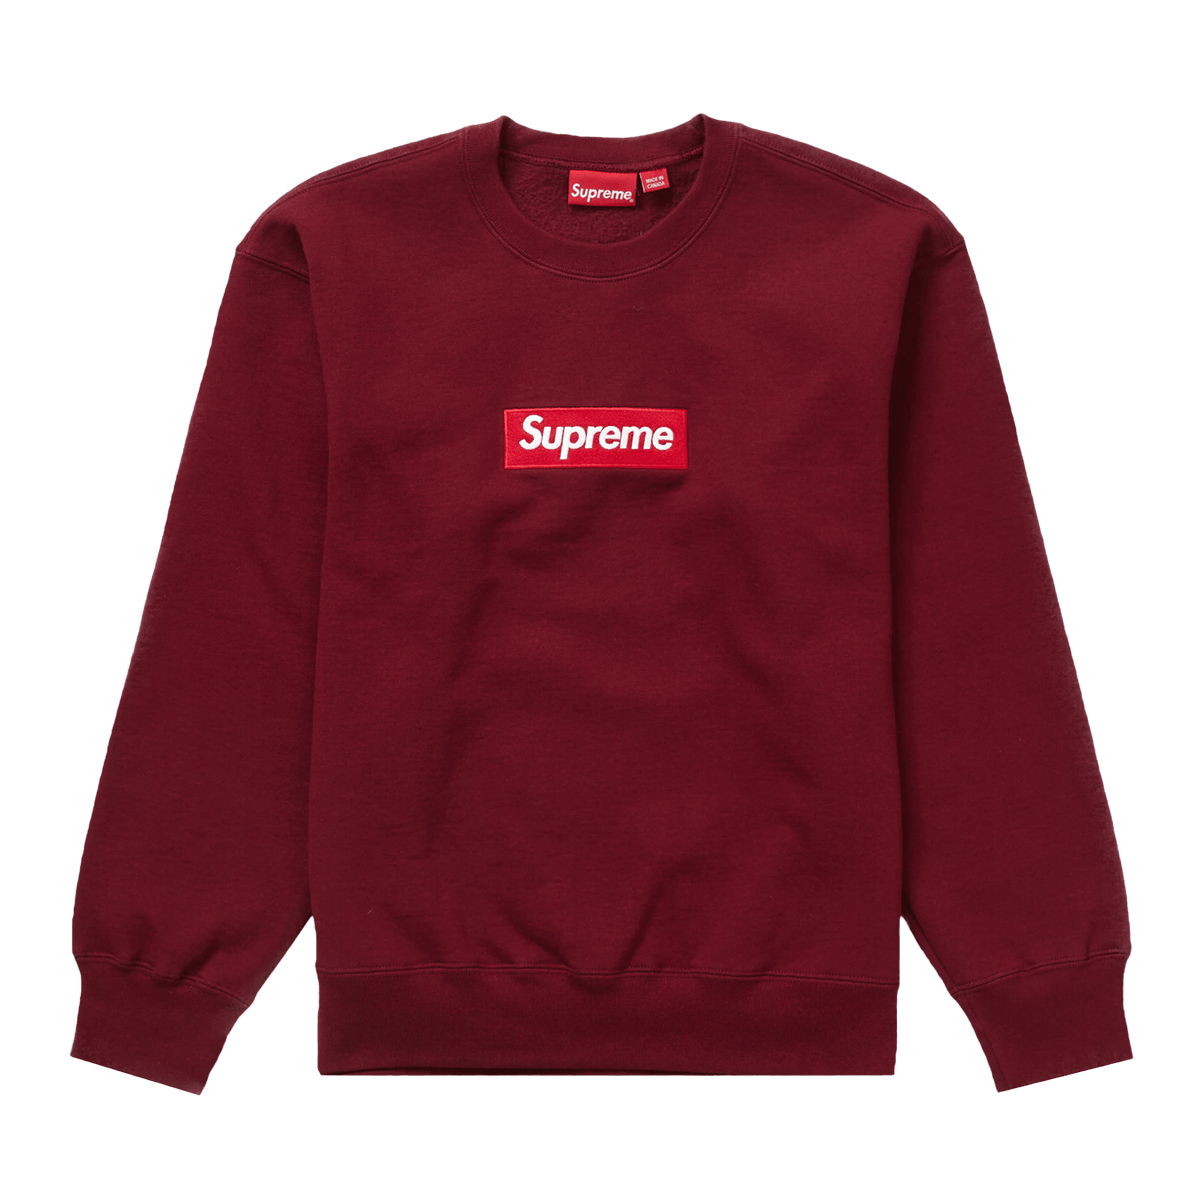 Supreme X Louis Vuitton Box Logo Hooded Sweatshirt 'Red' - Mad Kicks